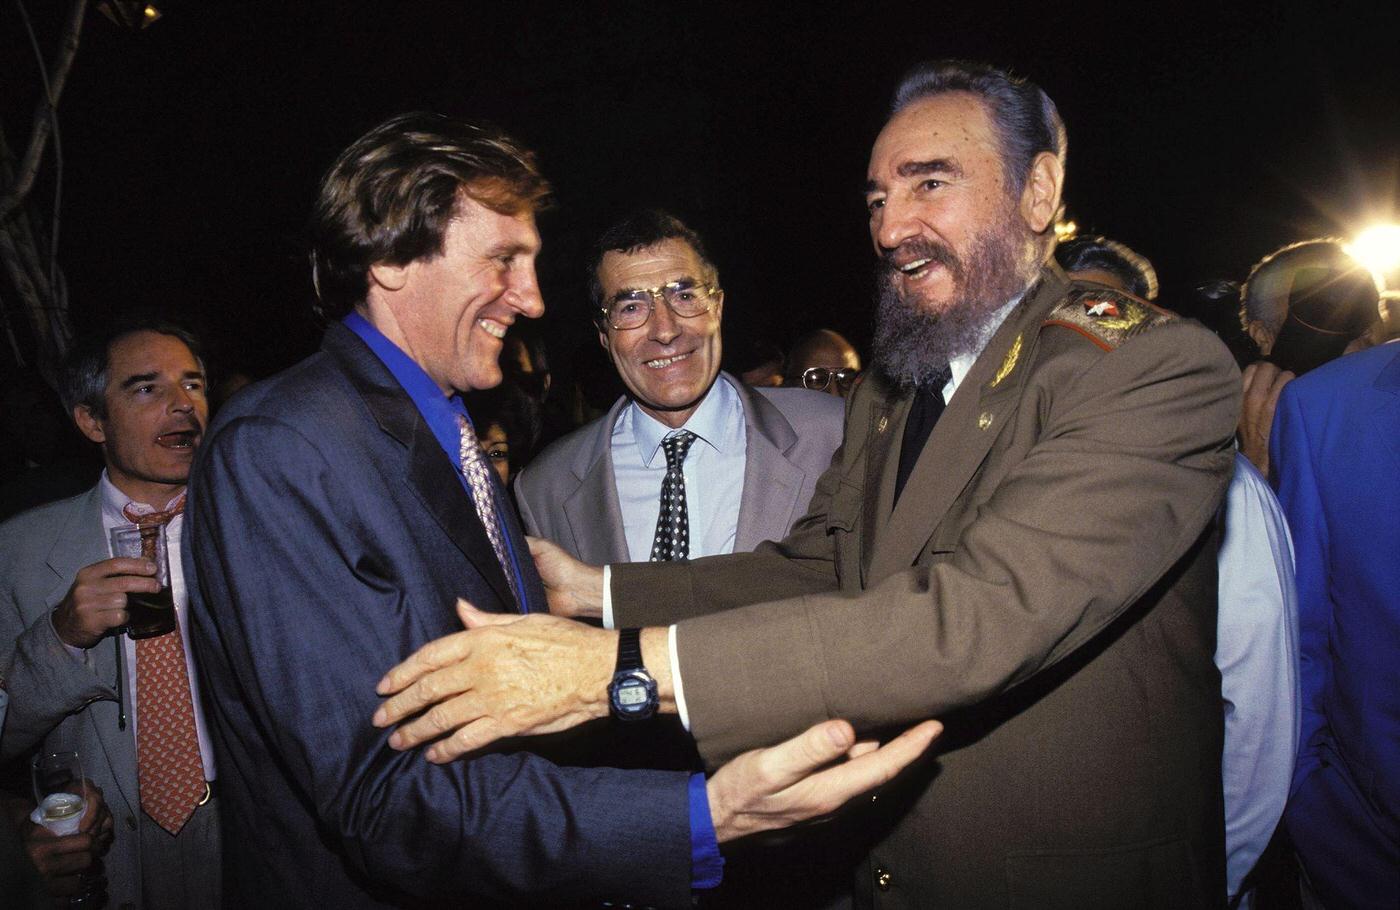 G Bourgoin and Gerard Depardieu in Cuba, November 27, 1996.